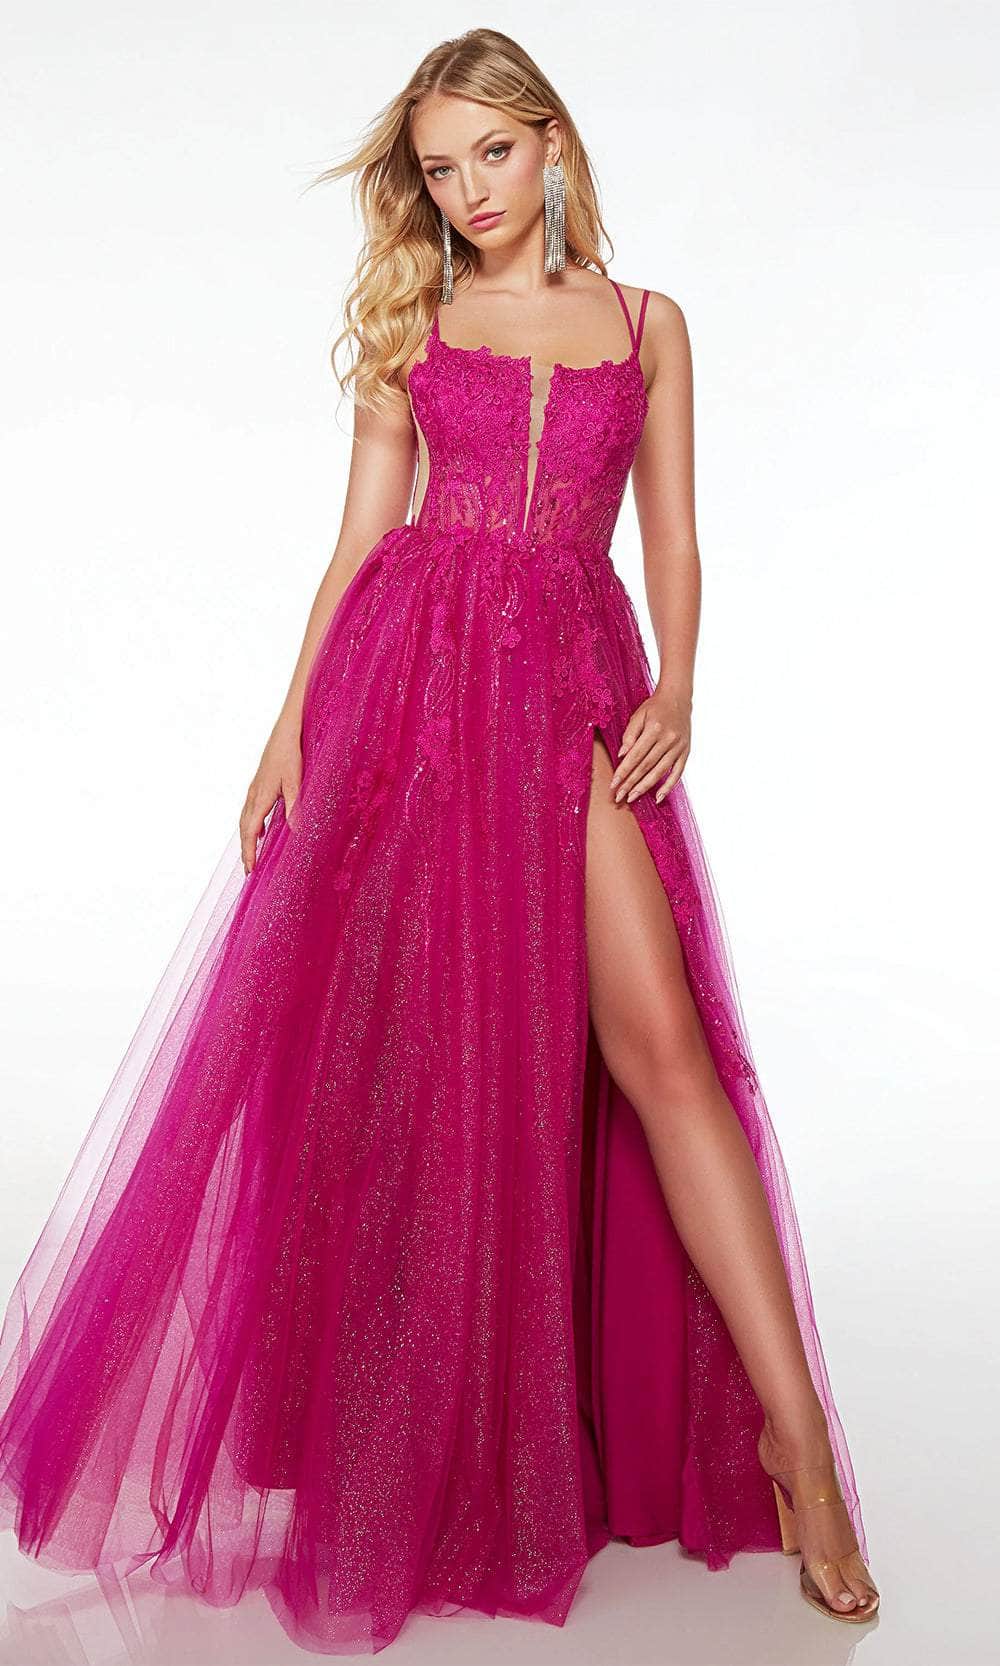 Alyce Paris 61498 - Lace Sleeveless Corset Prom Dress
